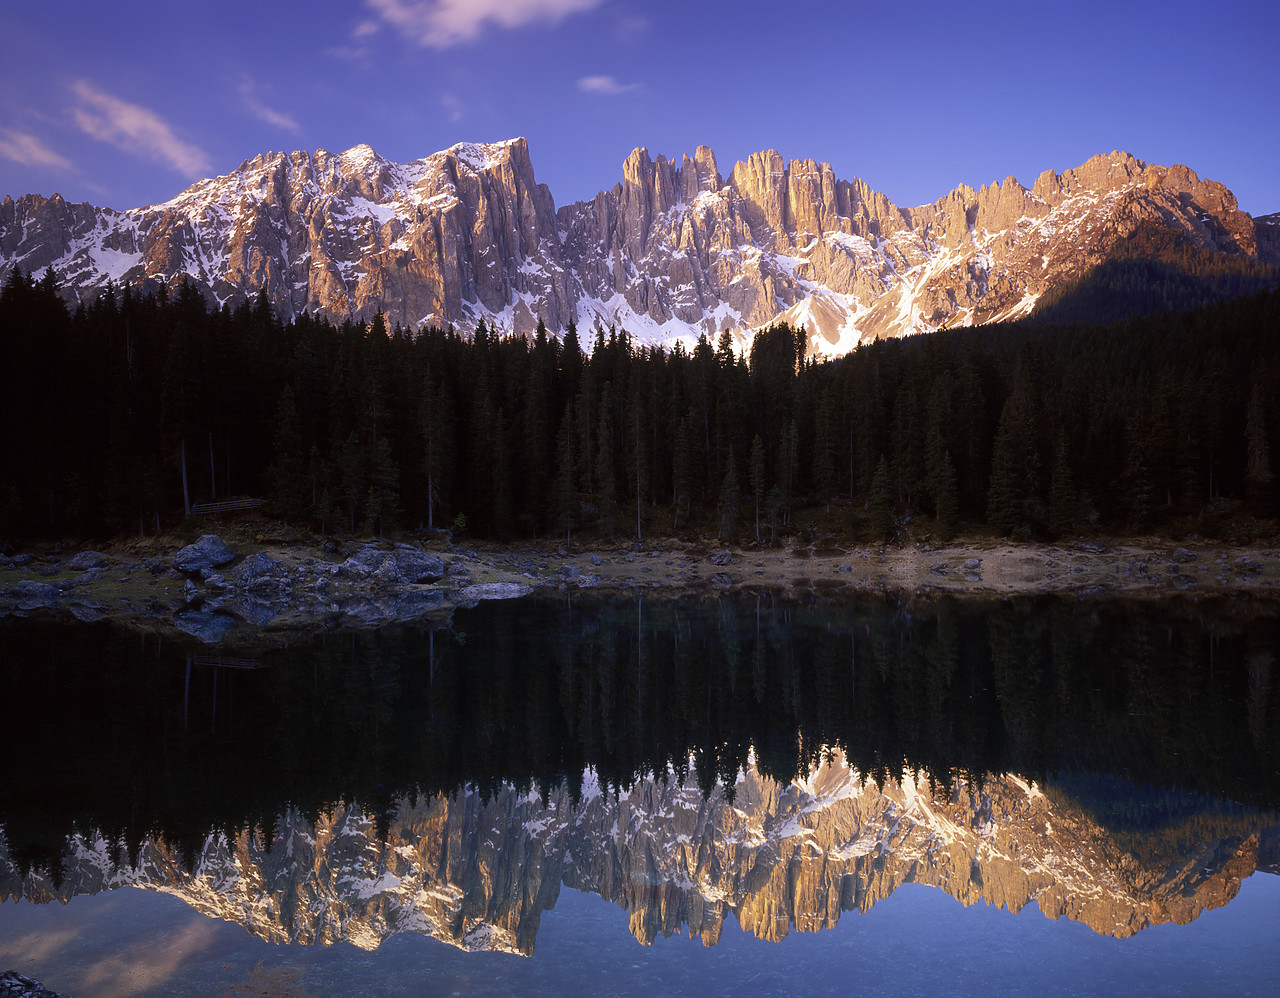 #970305-1 - Dolomites Reflecting in Lake Carezza, Italy